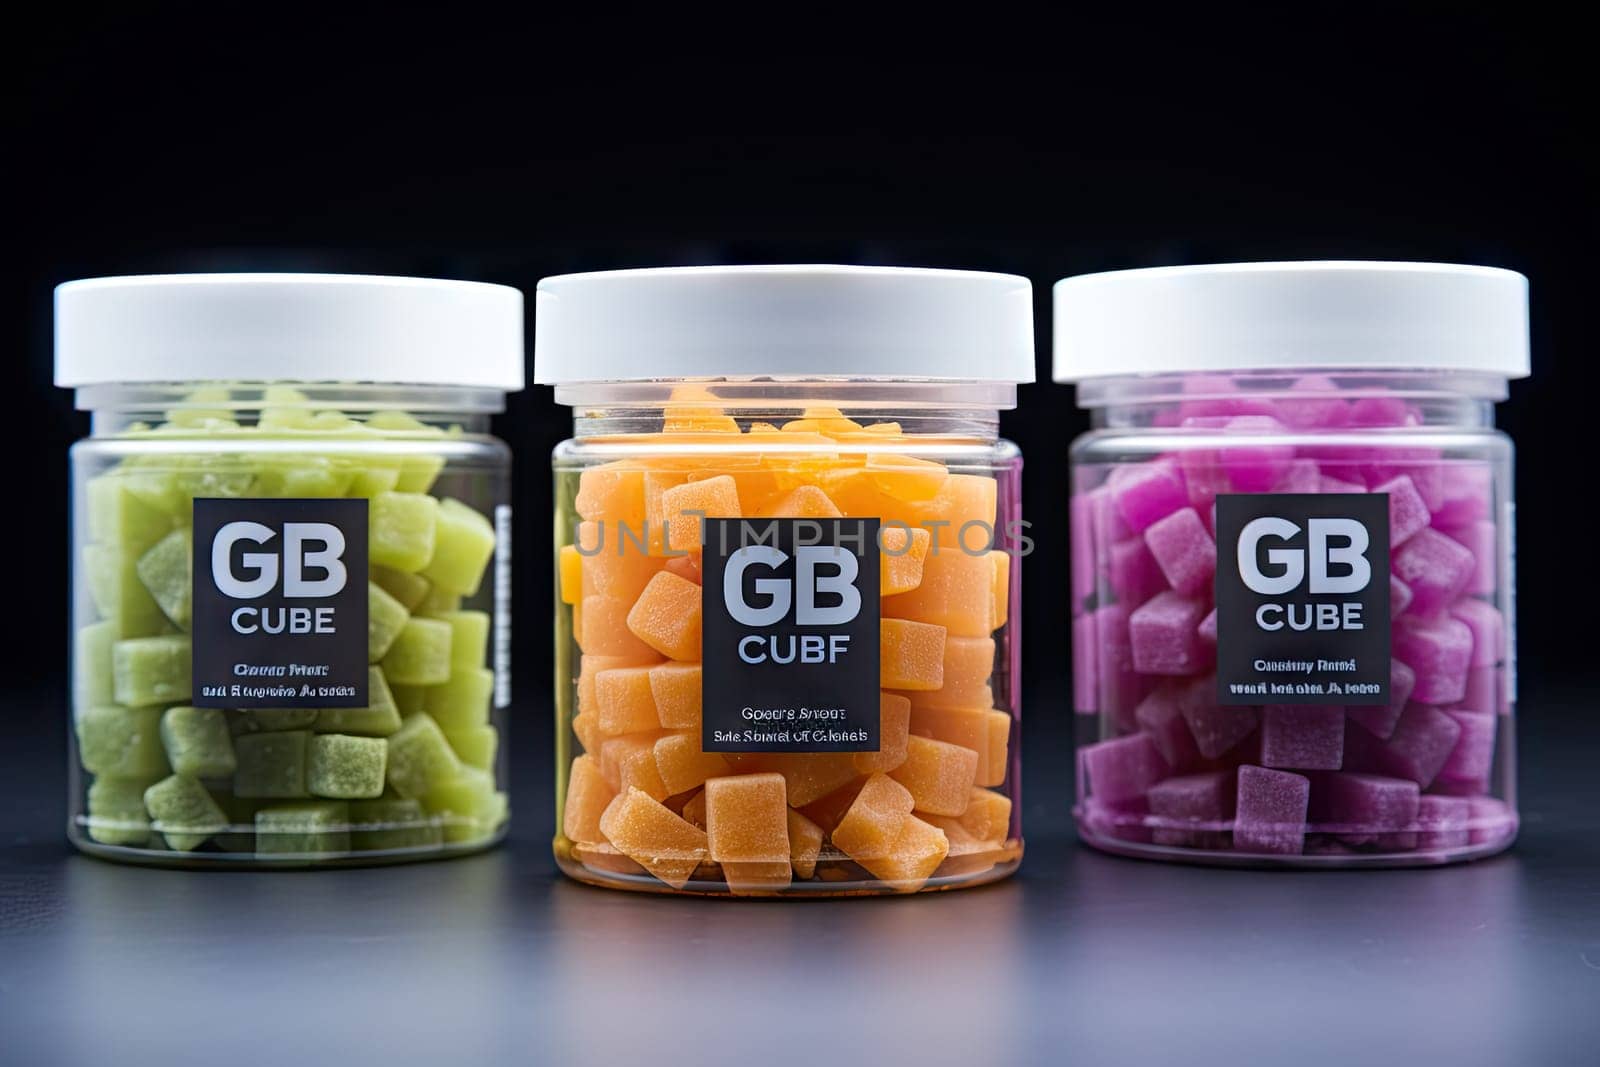 CBG Gummies. three jars of gb cube candy on a table by golibtolibov